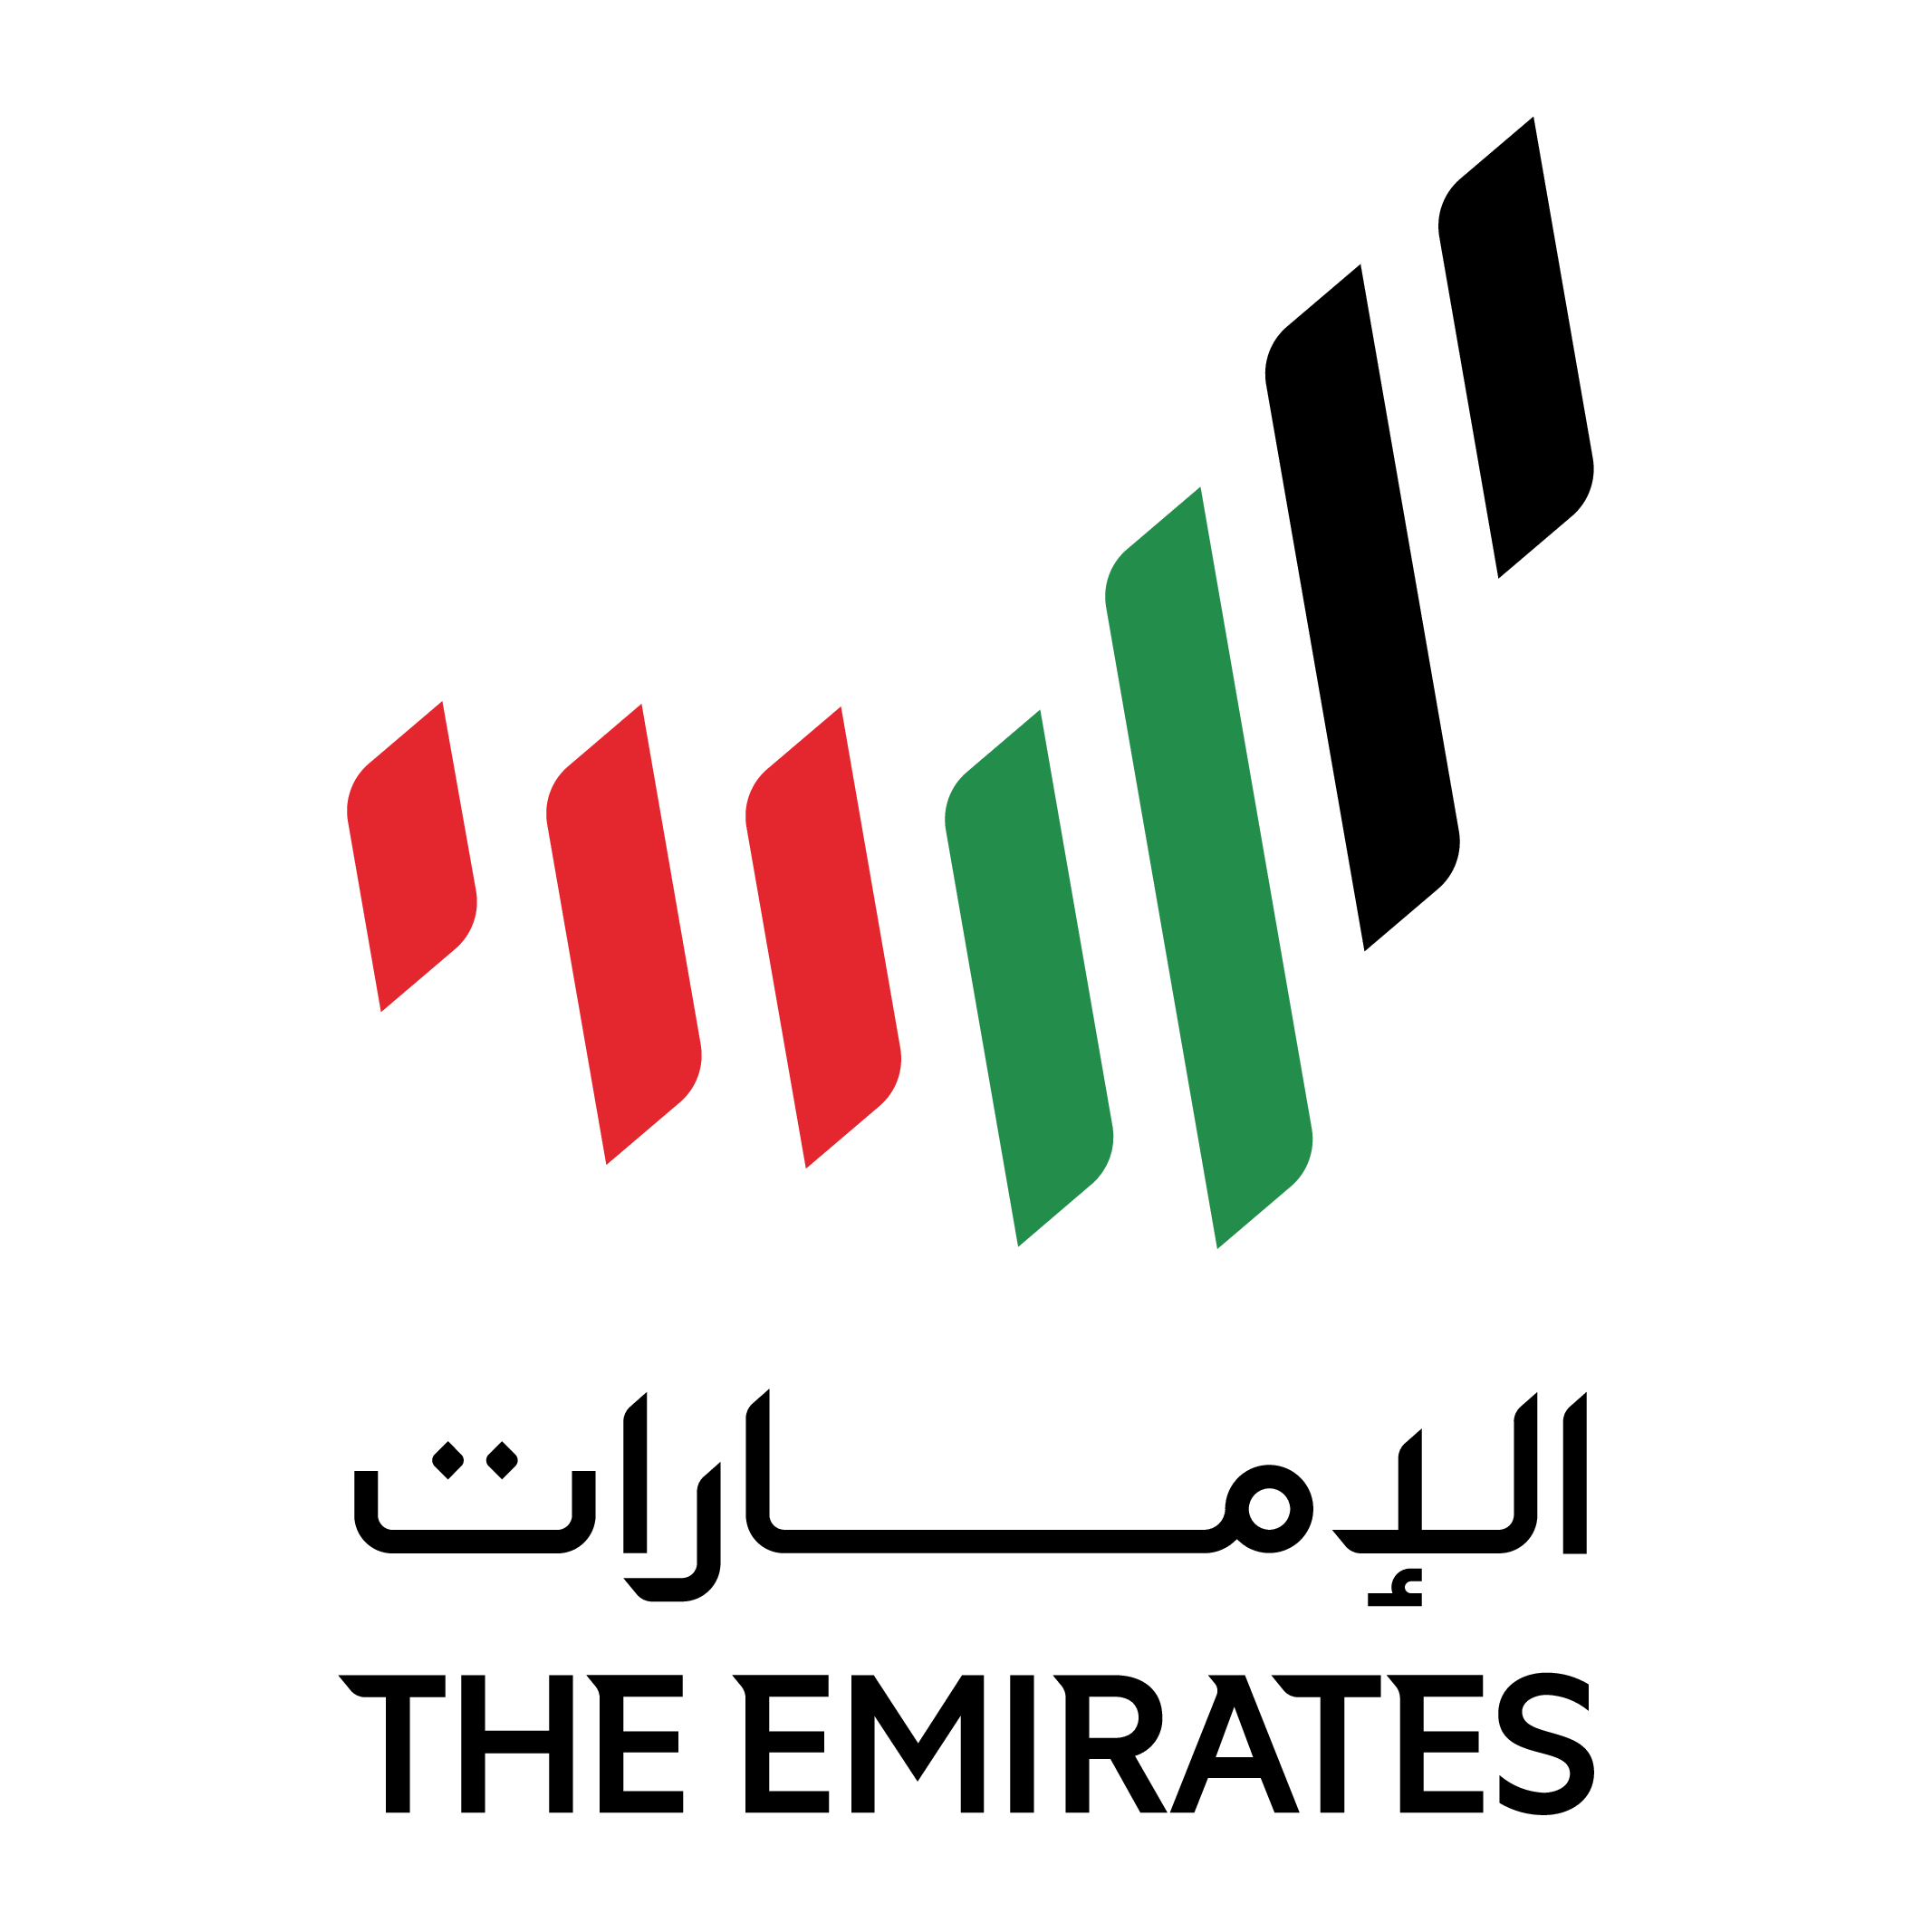 United Arab Emirates Logo PNG Vector (AI) Free Download